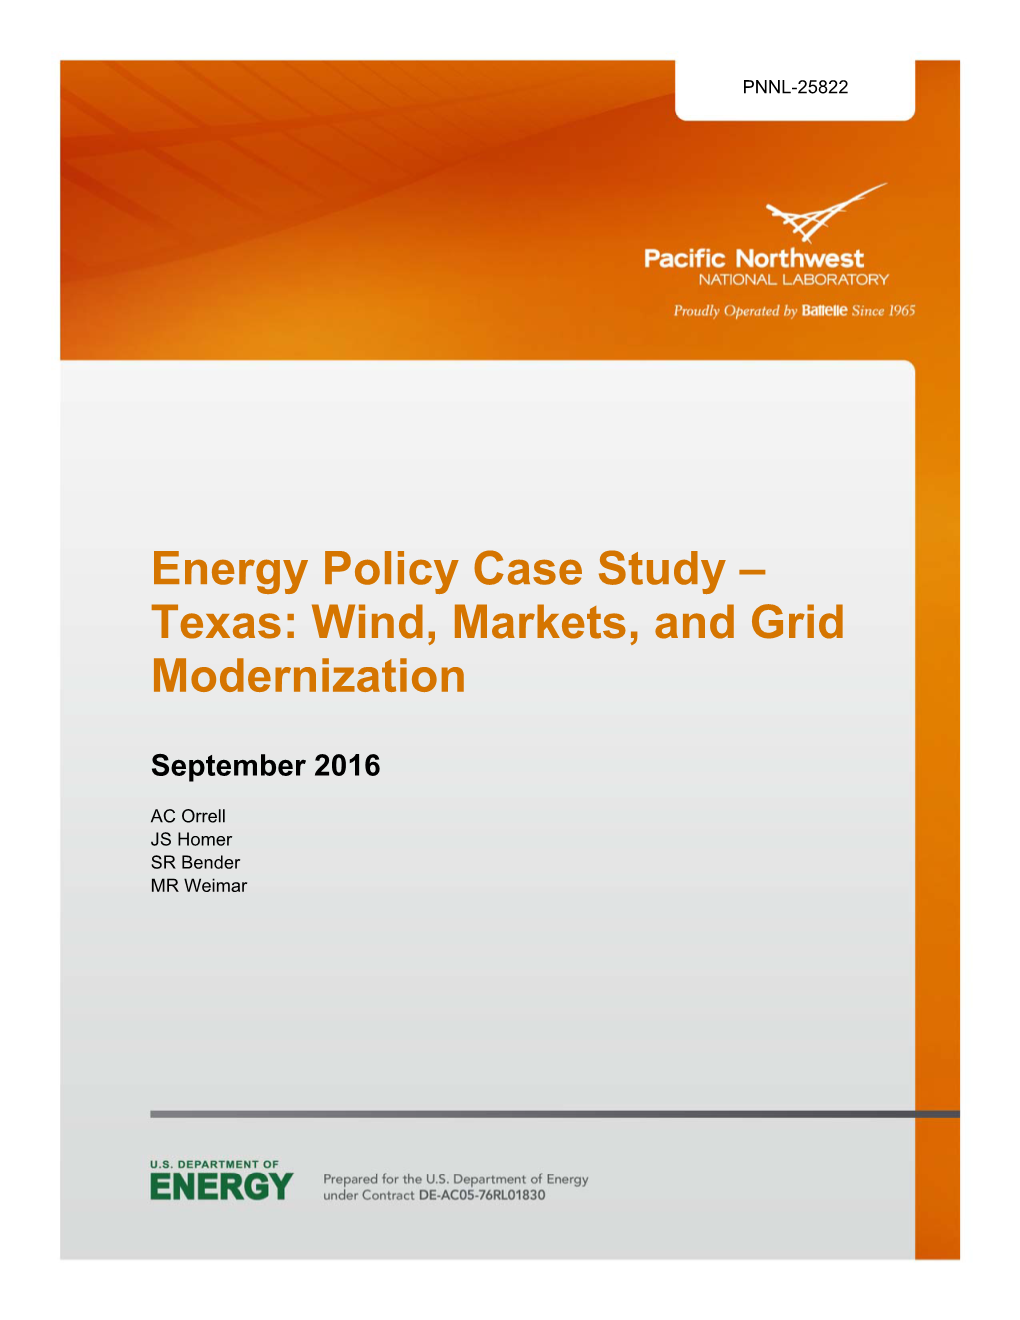 Texas: Wind, Markets, and Grid Modernization